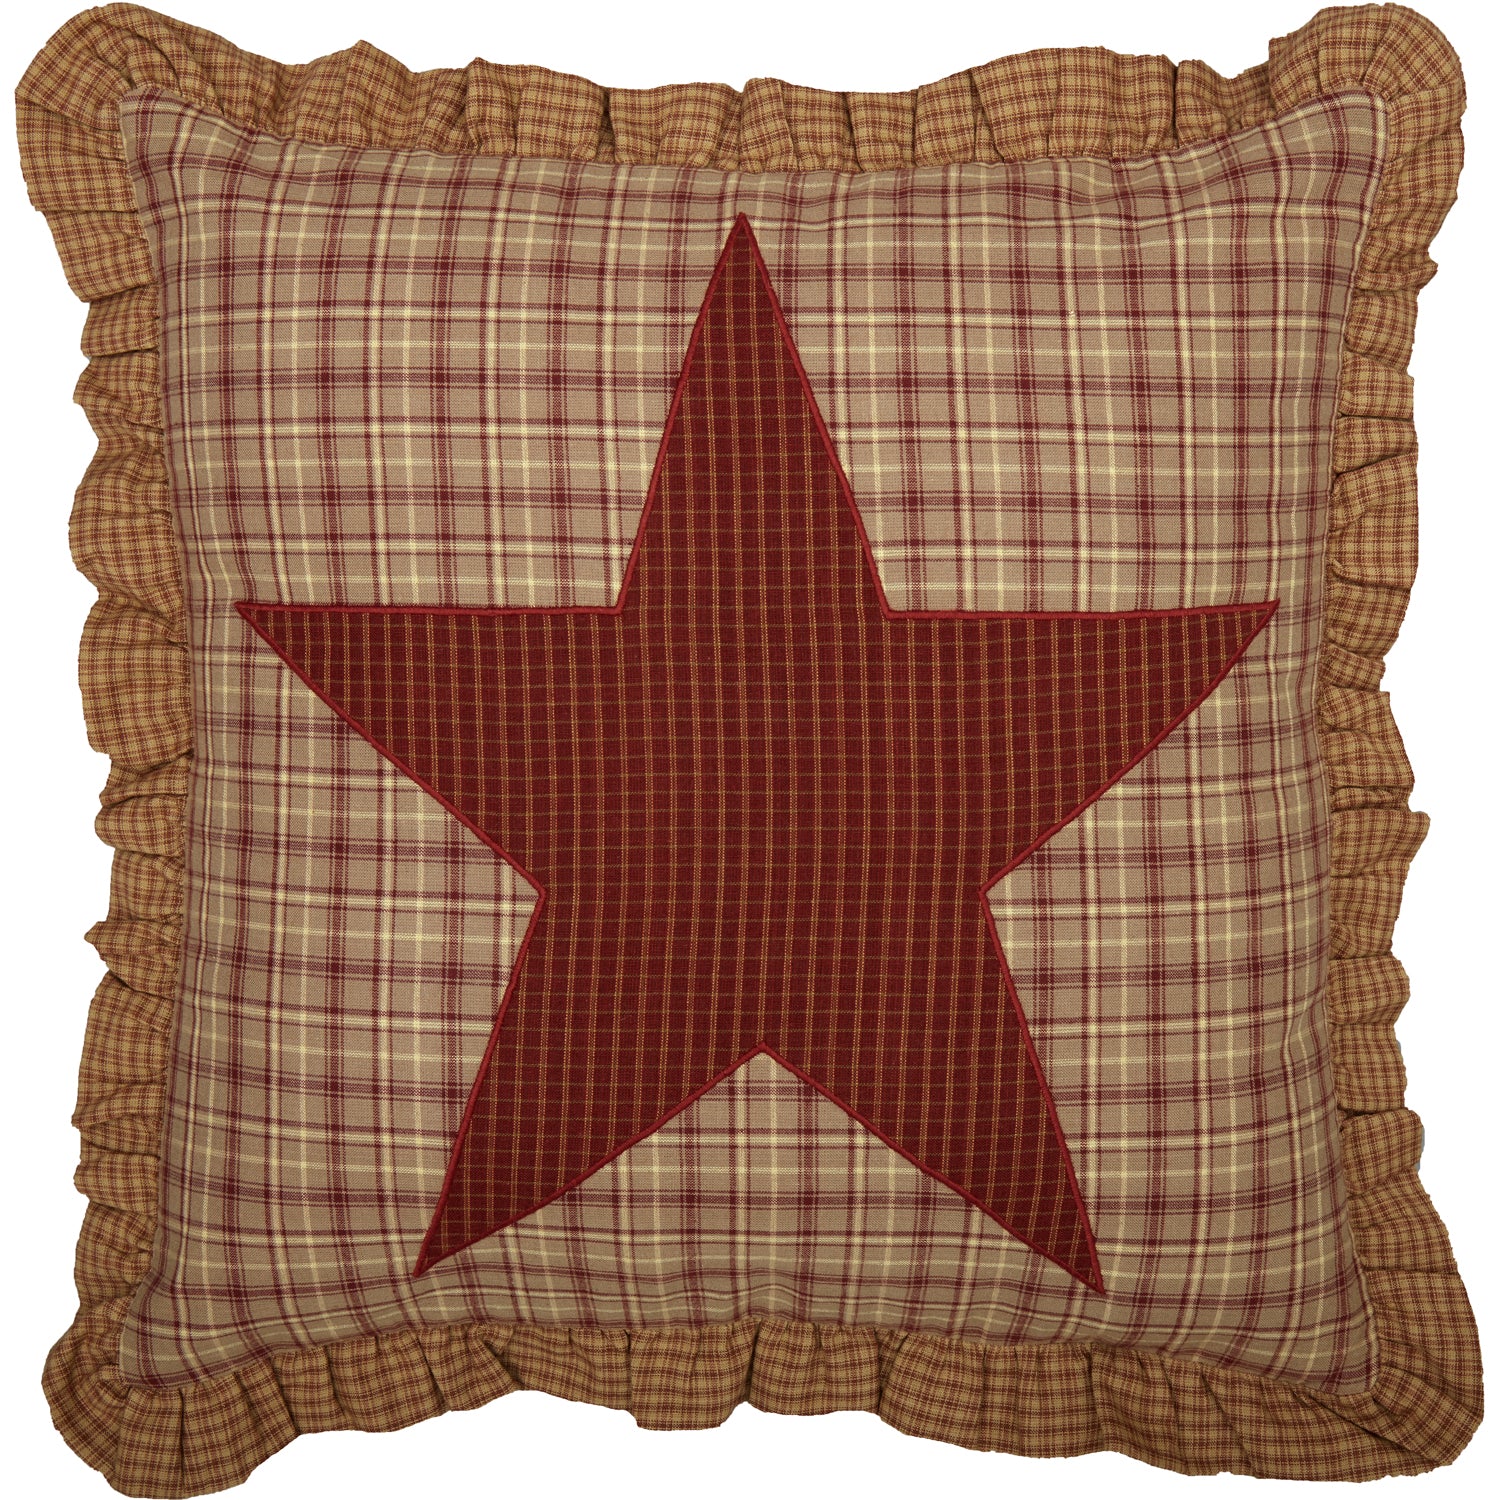 56670-Dawson-Star-Applique-Pillow-18x18-image-4